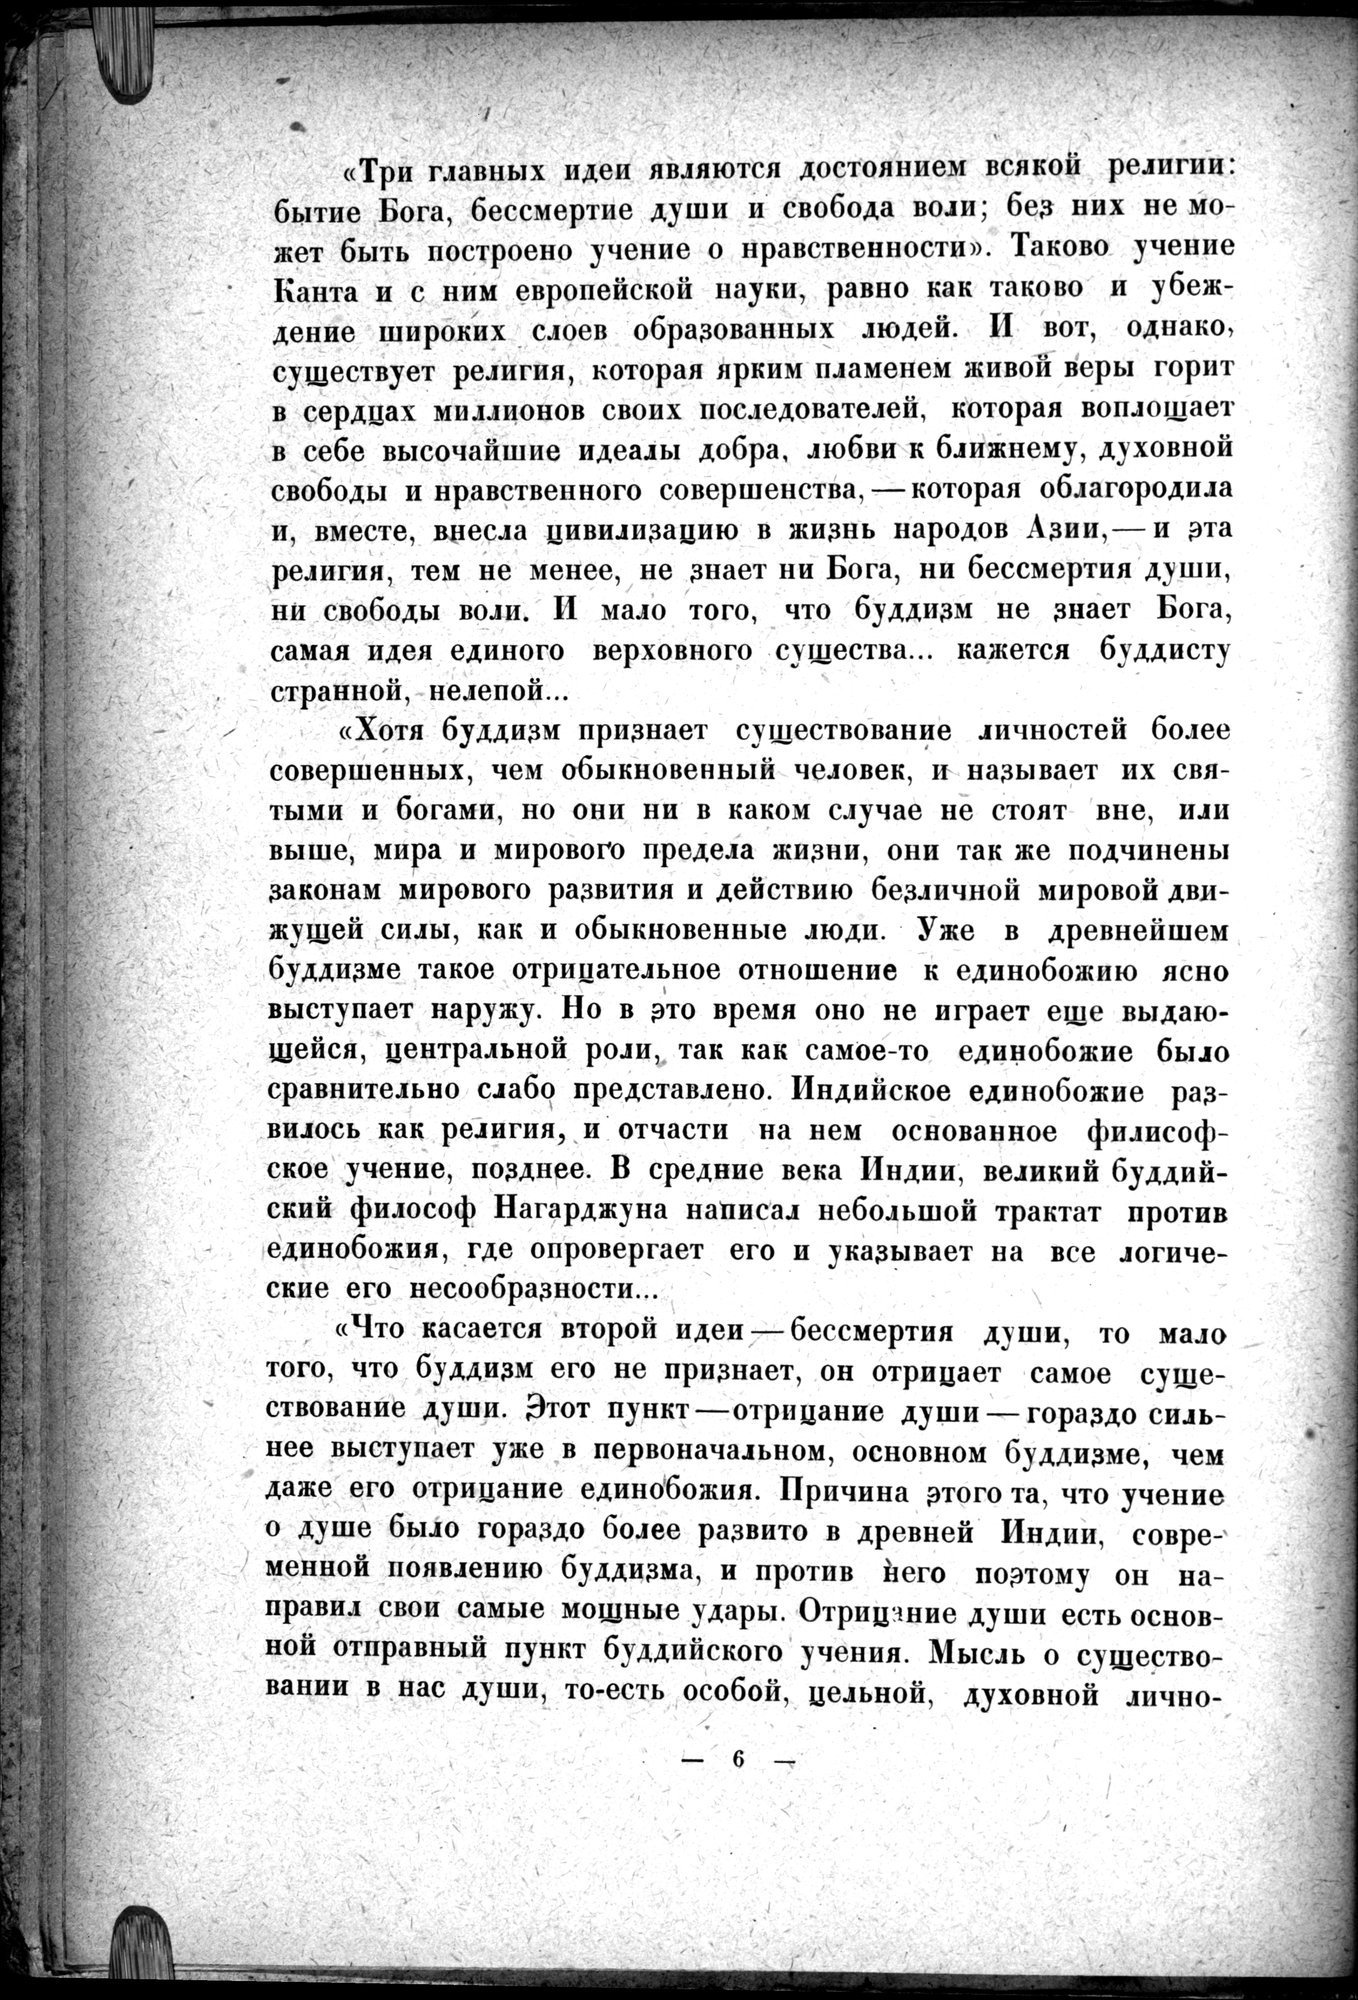 Mongoliya i Amdo i mertby gorod Khara-Khoto : vol.1 / Page 20 (Grayscale High Resolution Image)